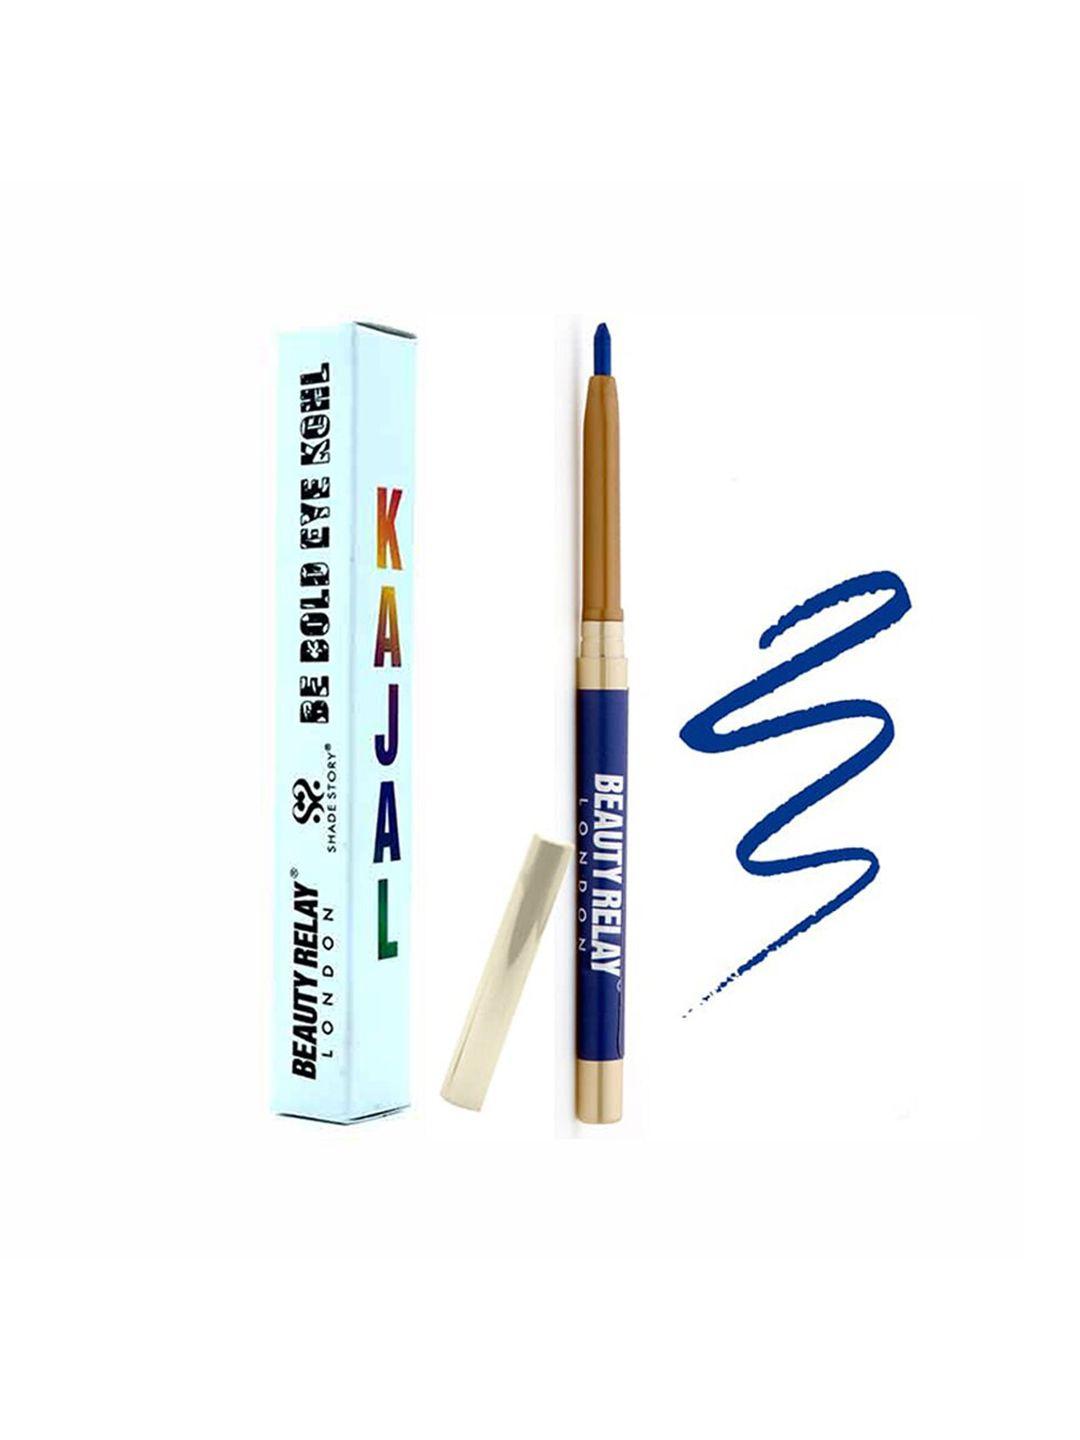 beautyrelay london be bold eye kohl kajal pencil 0.27g - electric blue